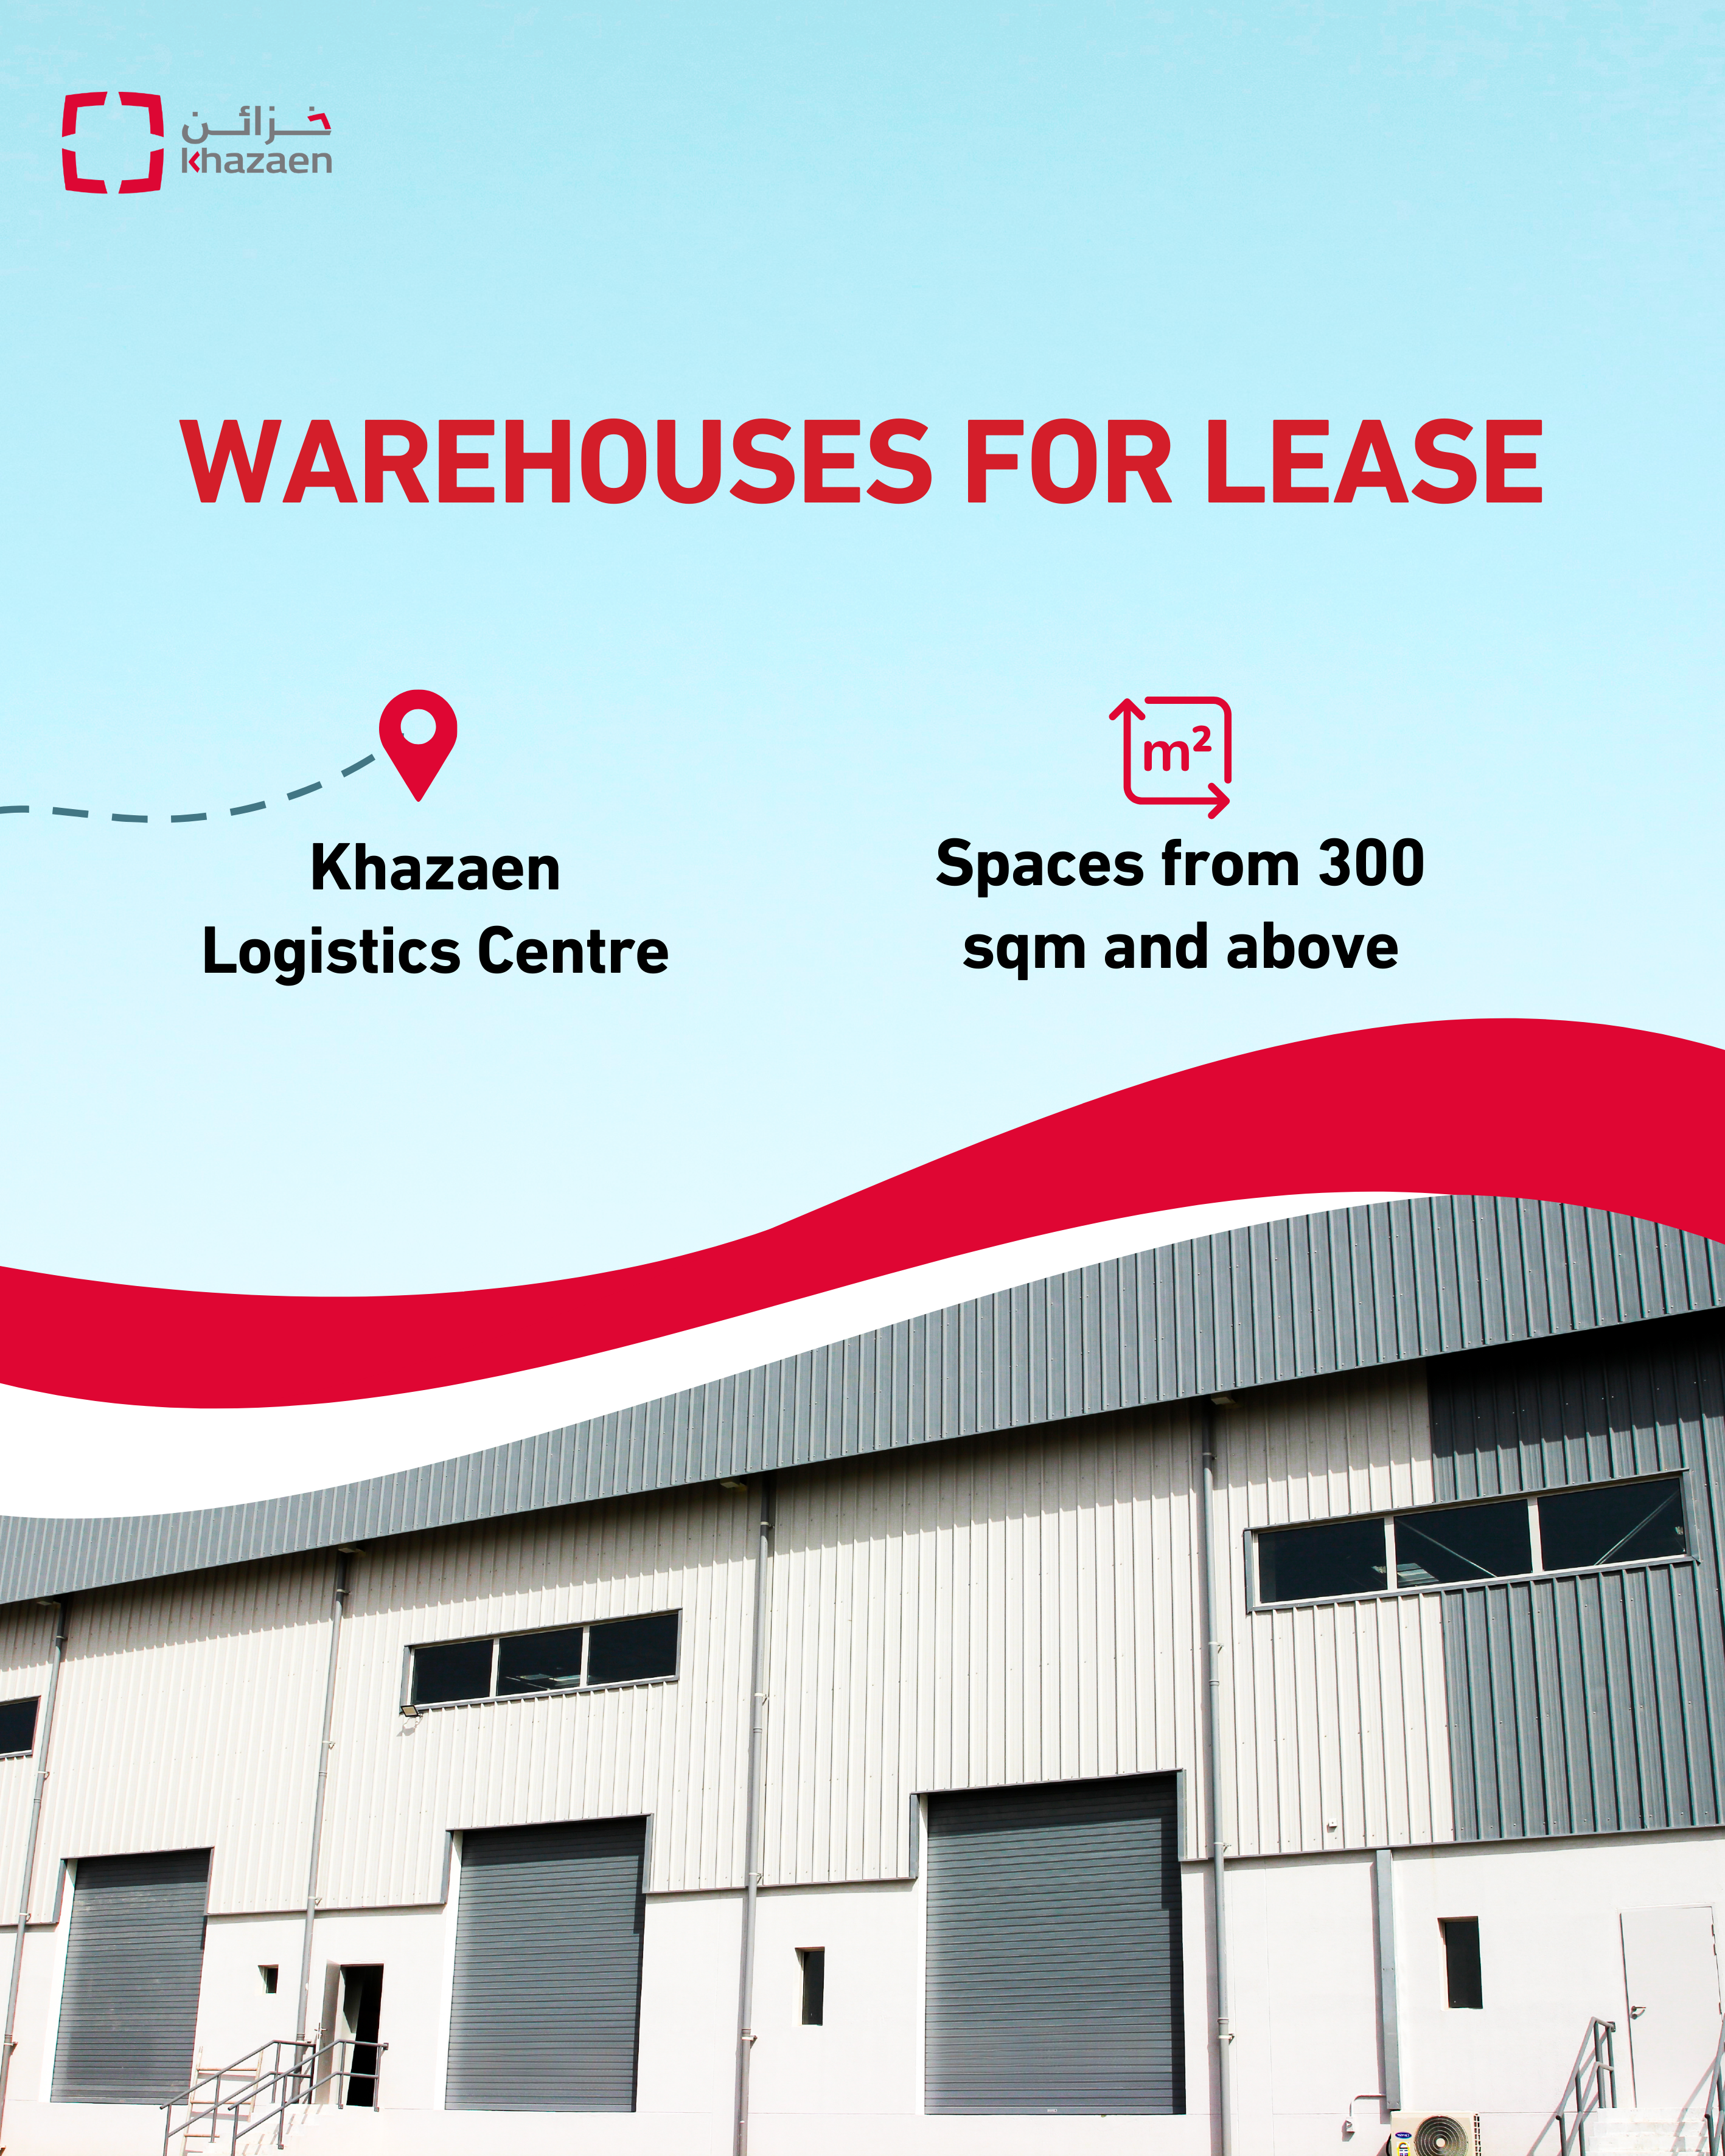 Warehouses for lease at Khazaen Logistic Centre